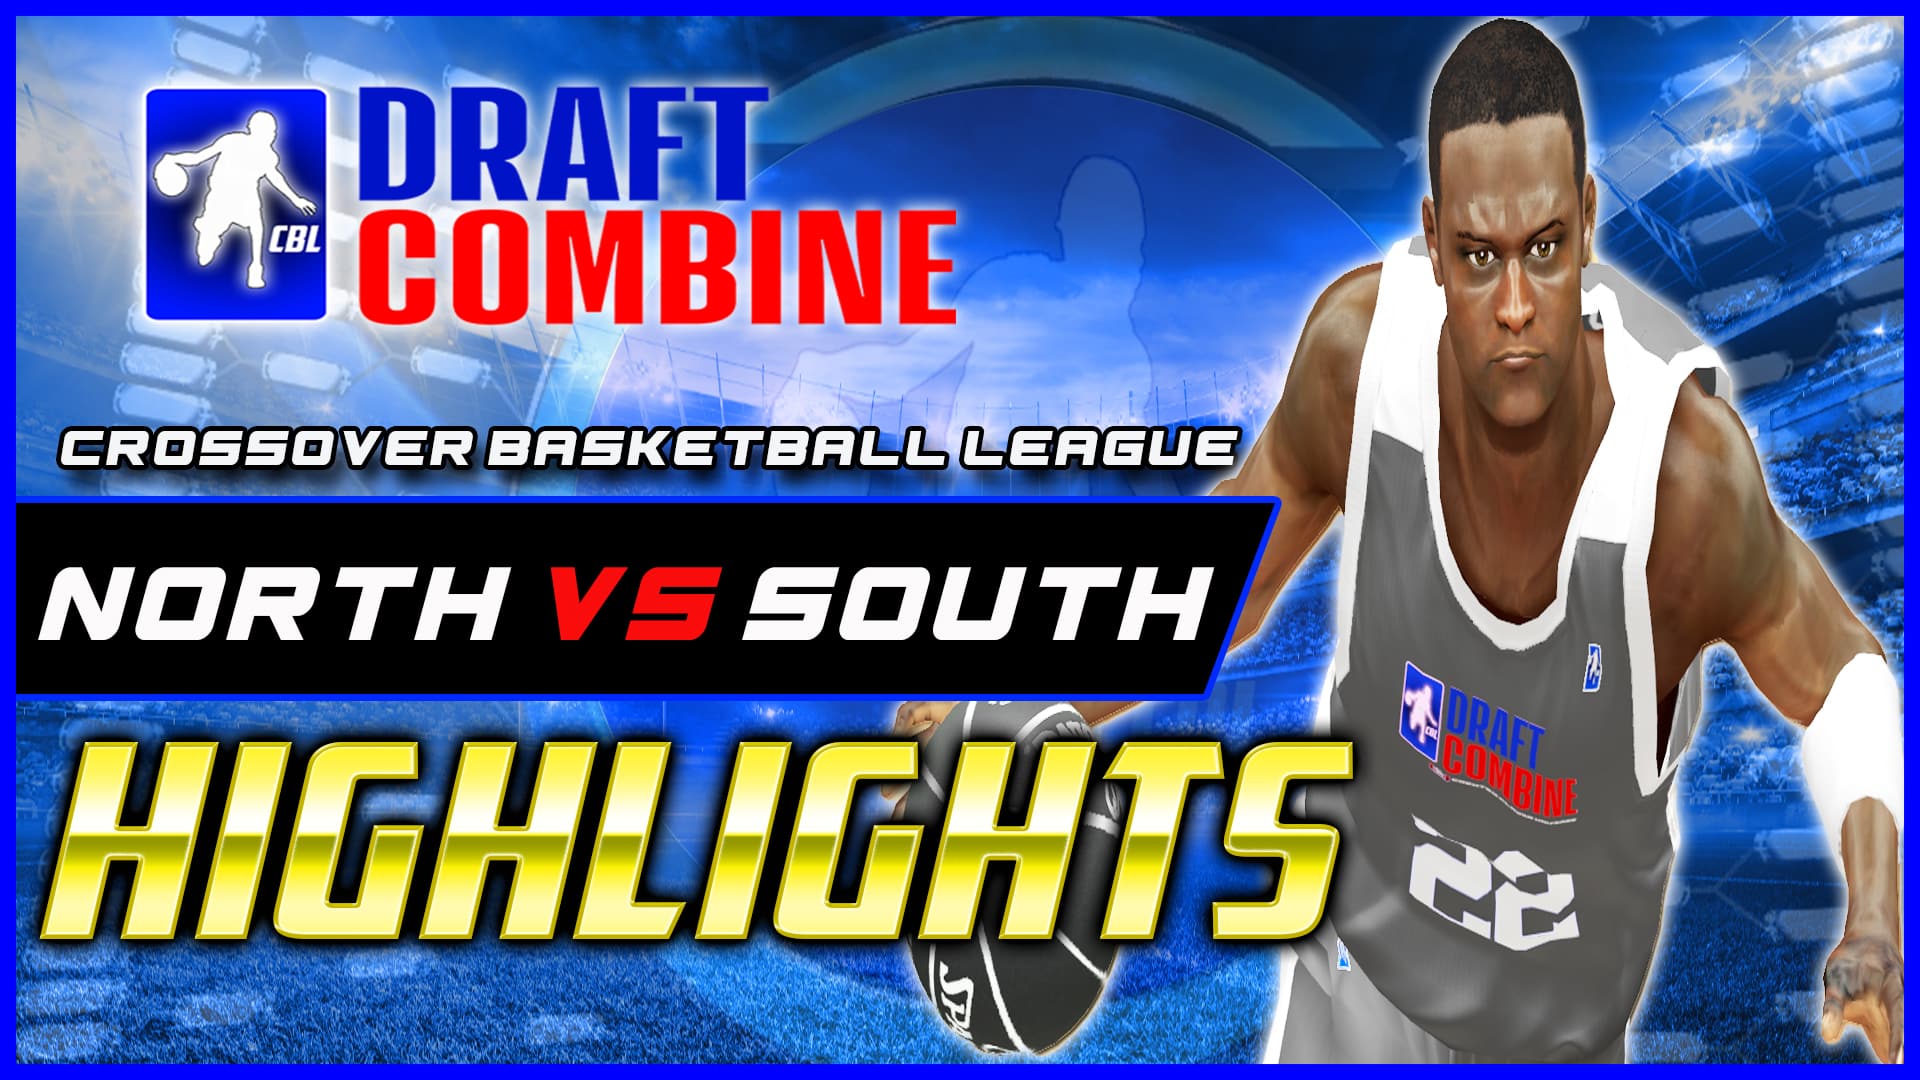 NBA 2K13 GAME HIGHLIGHTS_CBL DRAFT COMBINE (NORTH VS SOUTH)